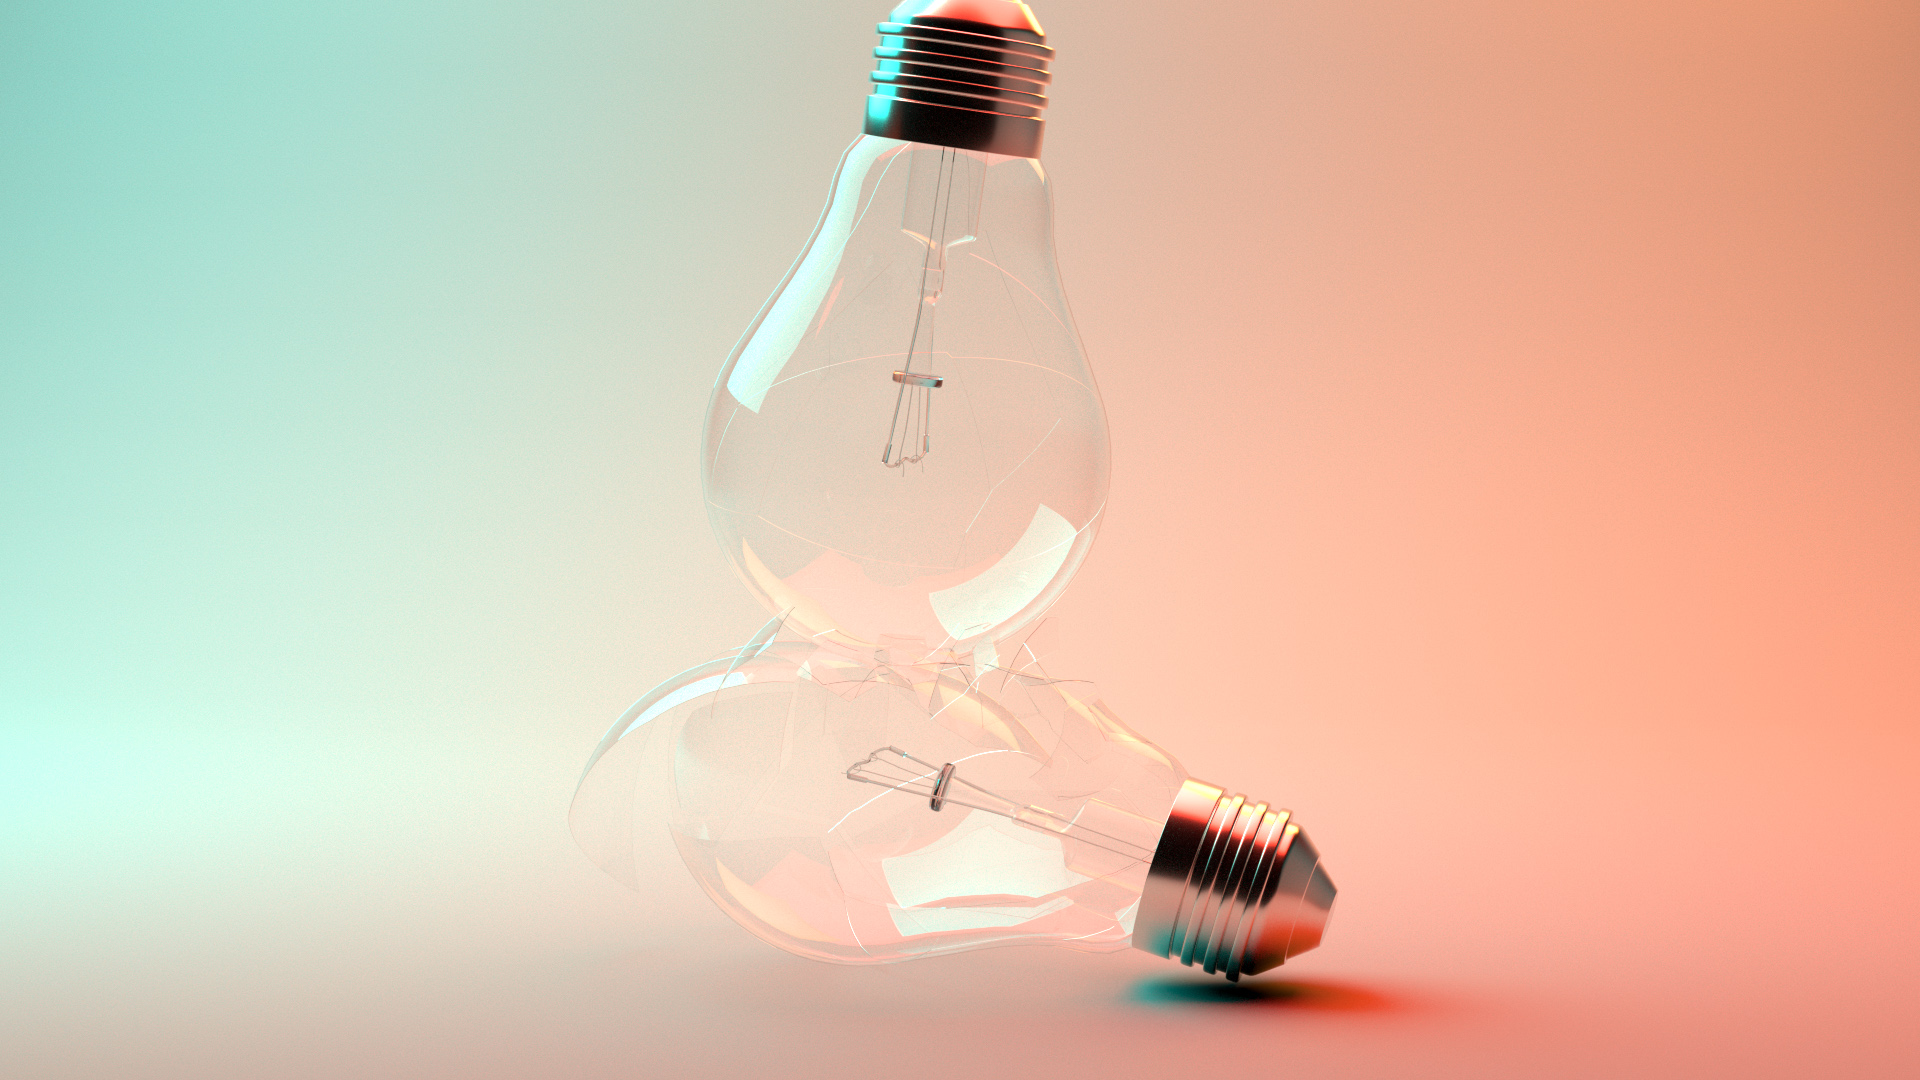 Representational 3D Light Bulb Fracture Animation | Cinema 4D, Redshift, Lighting Kit Pro